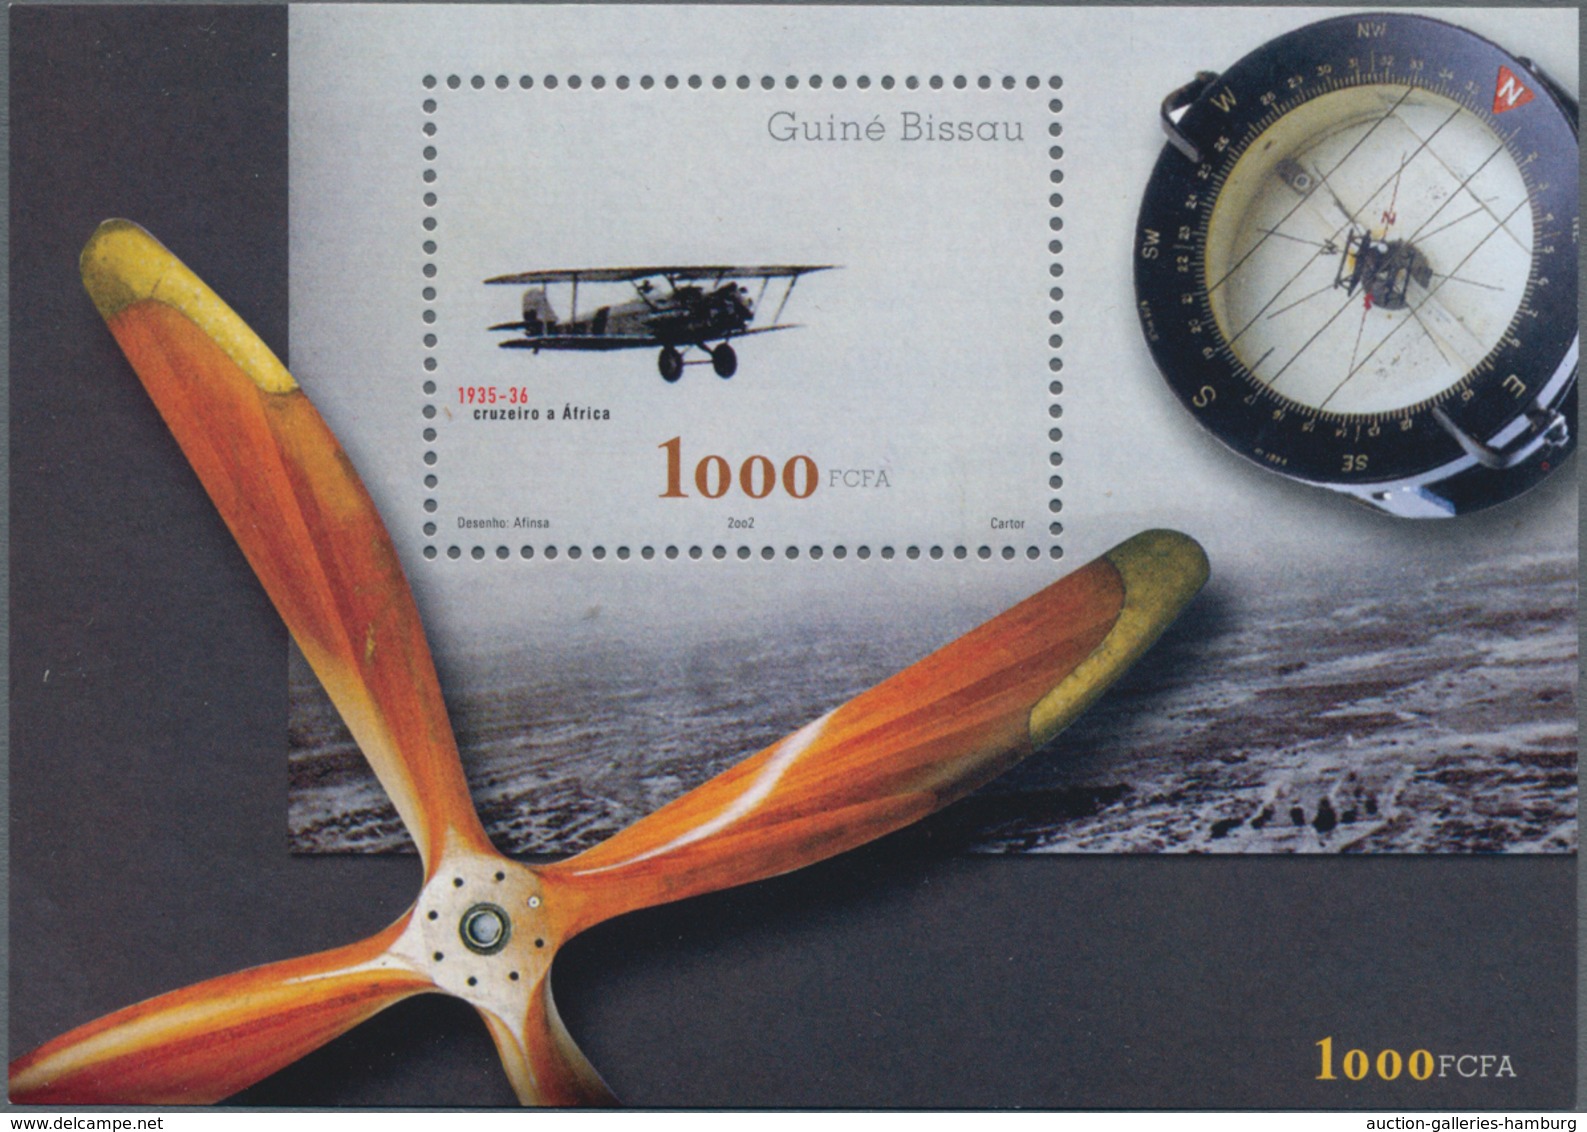 Guinea-Bissau: 2002, AVIATION, Souvenir Sheet, Investment Lot Of 1000 Copies Mint Never Hinged (Mi.n - Guinea-Bissau